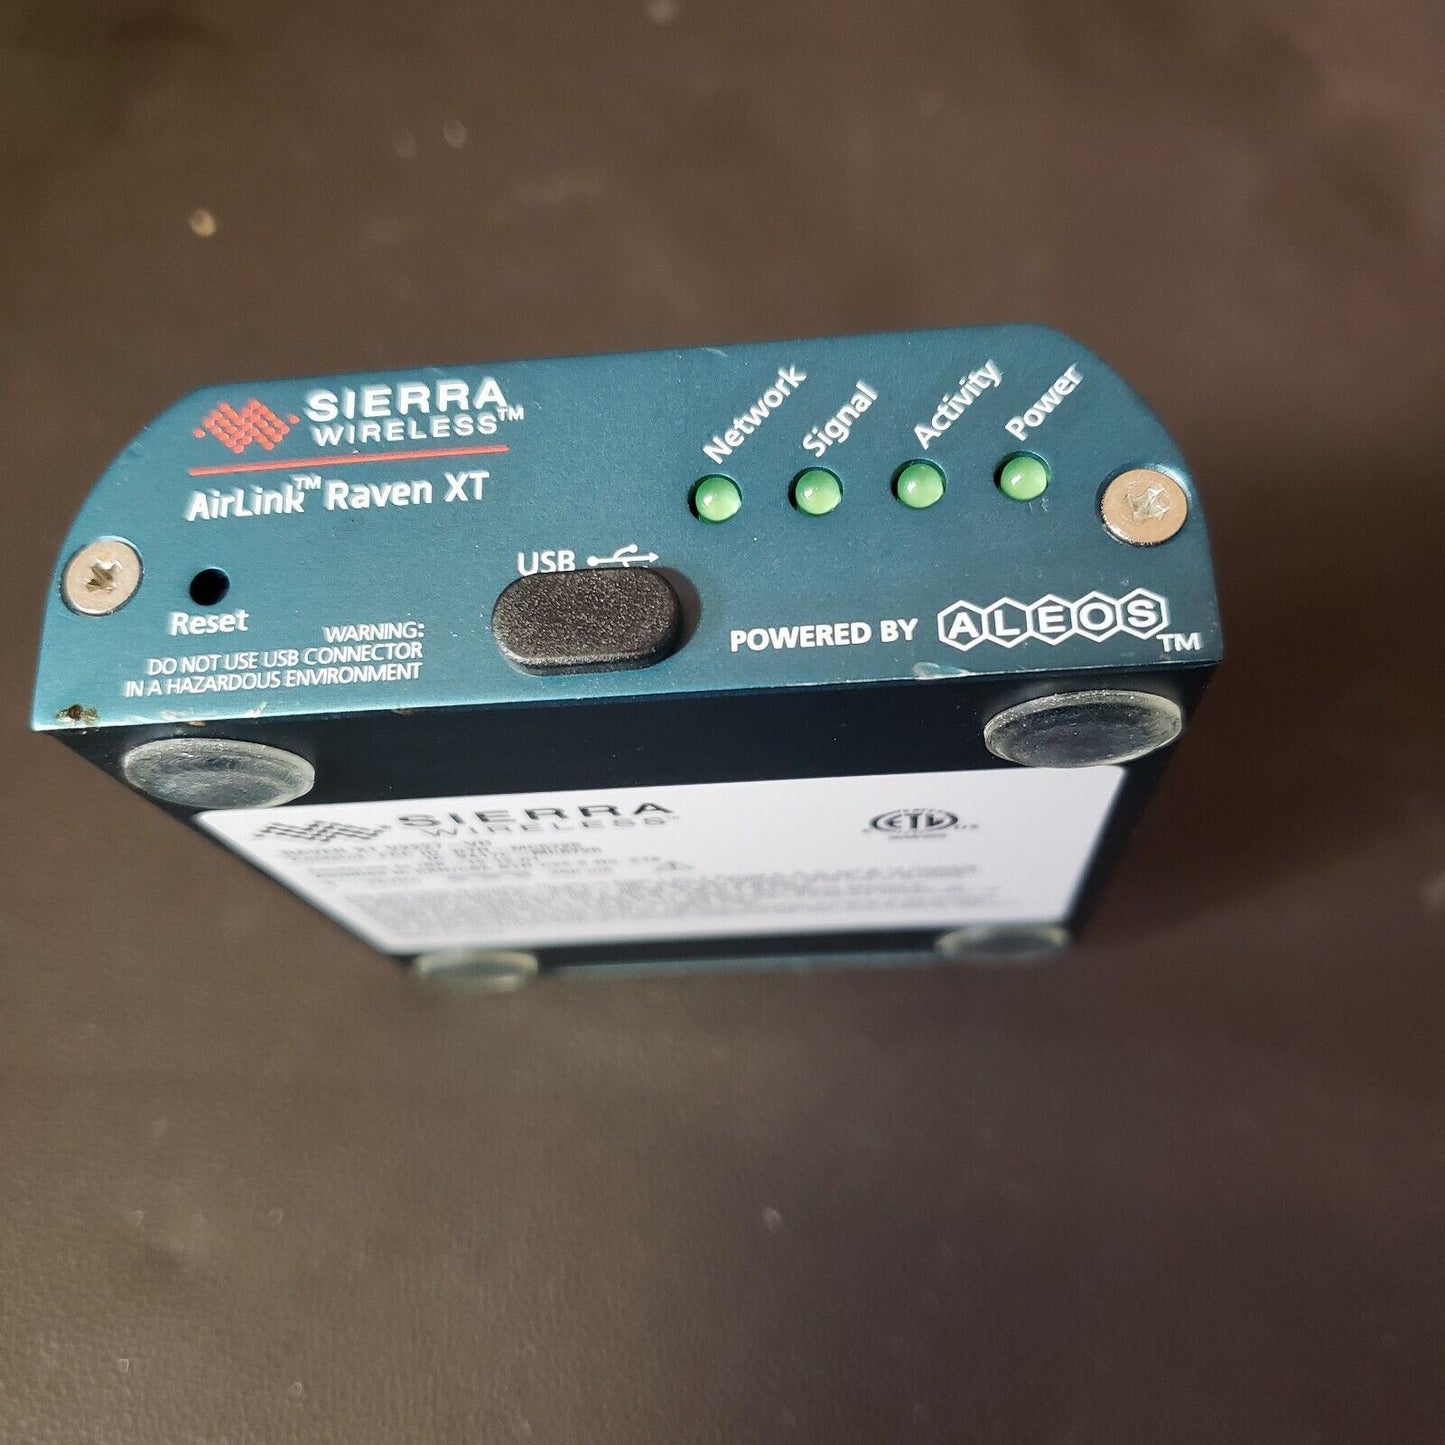 Sierra Wireless Raven XT V2227-VD Airlink USB Aleos Connectivity